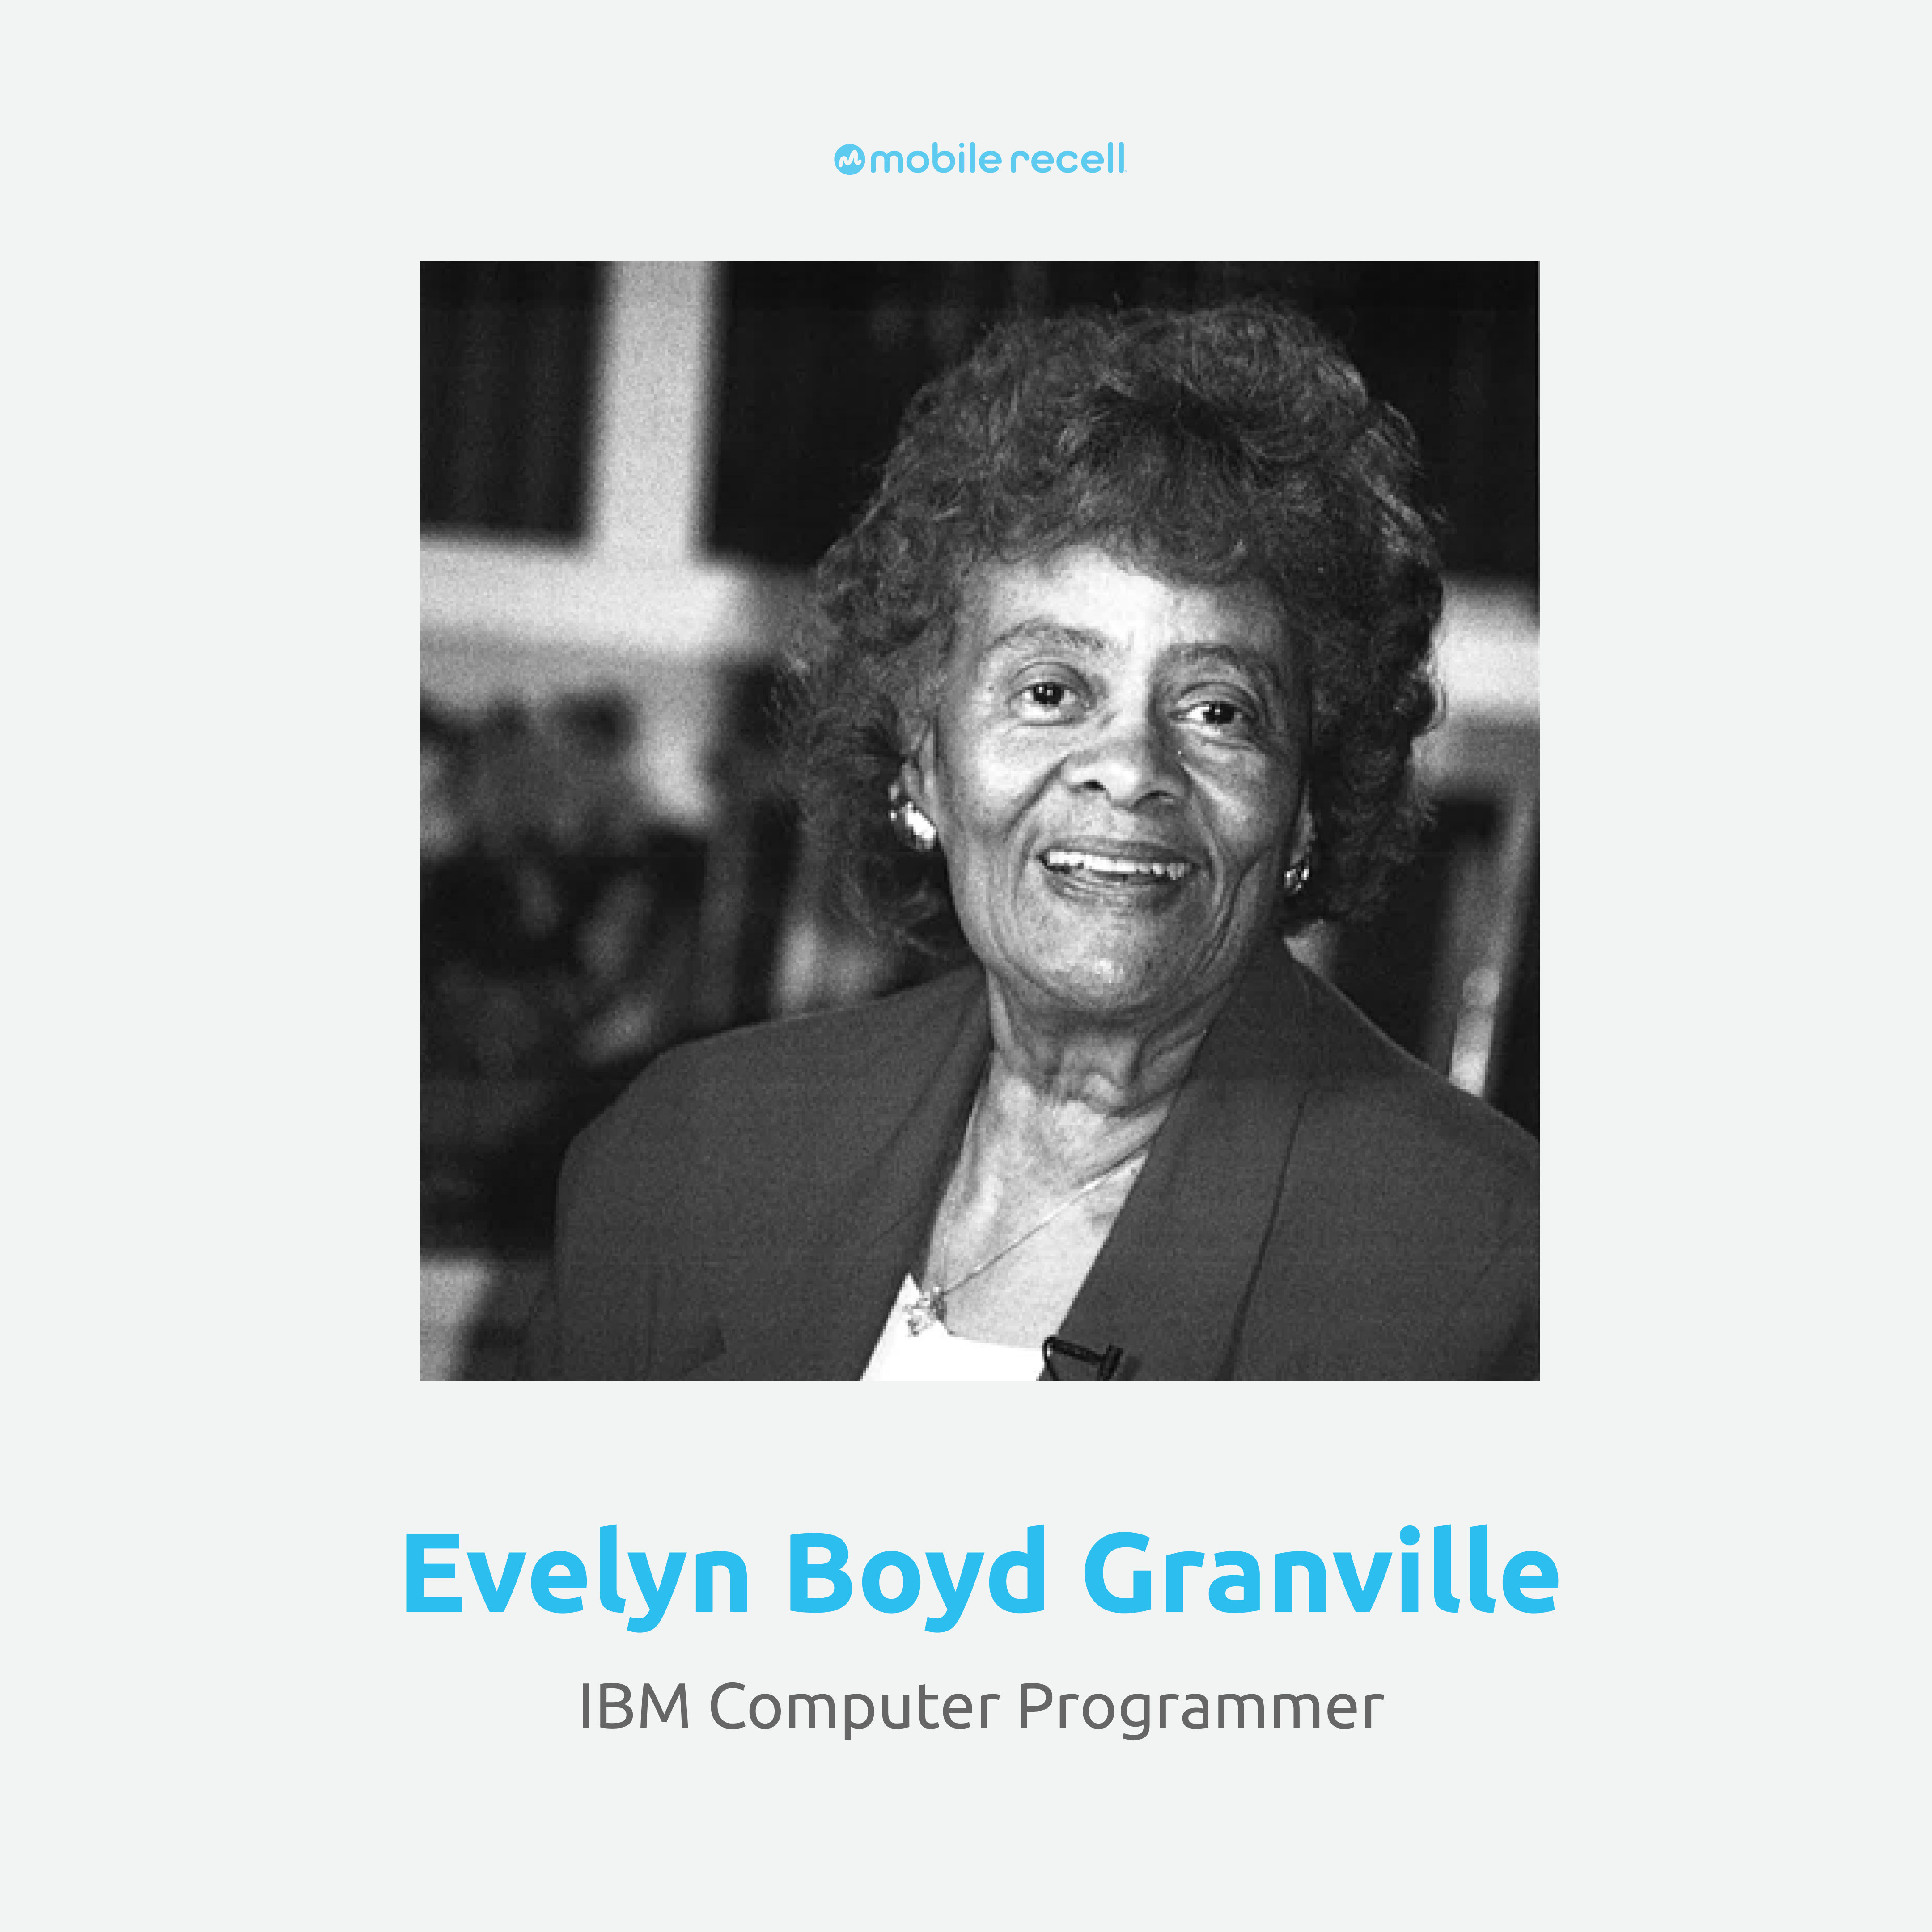 Evelyn Boyd Granville